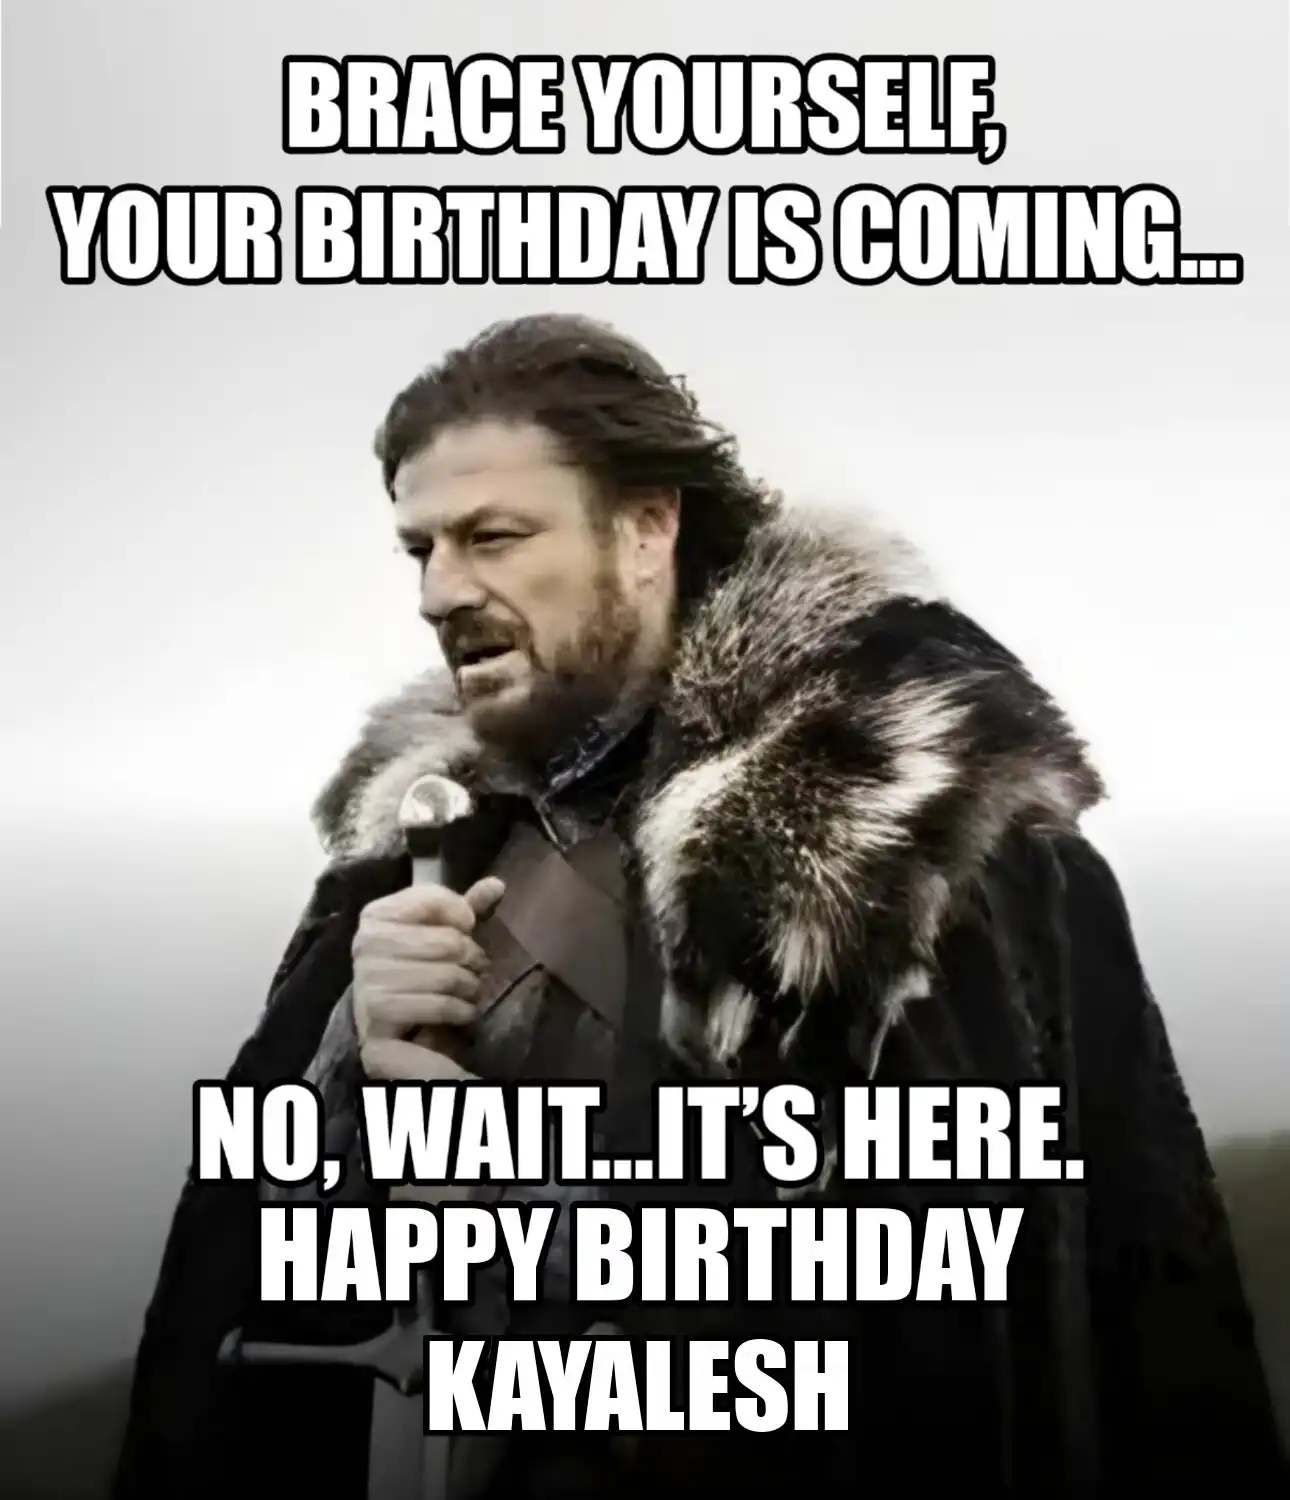 Happy Birthday Kayalesh Brace Yourself Your Birthday Is Coming Meme